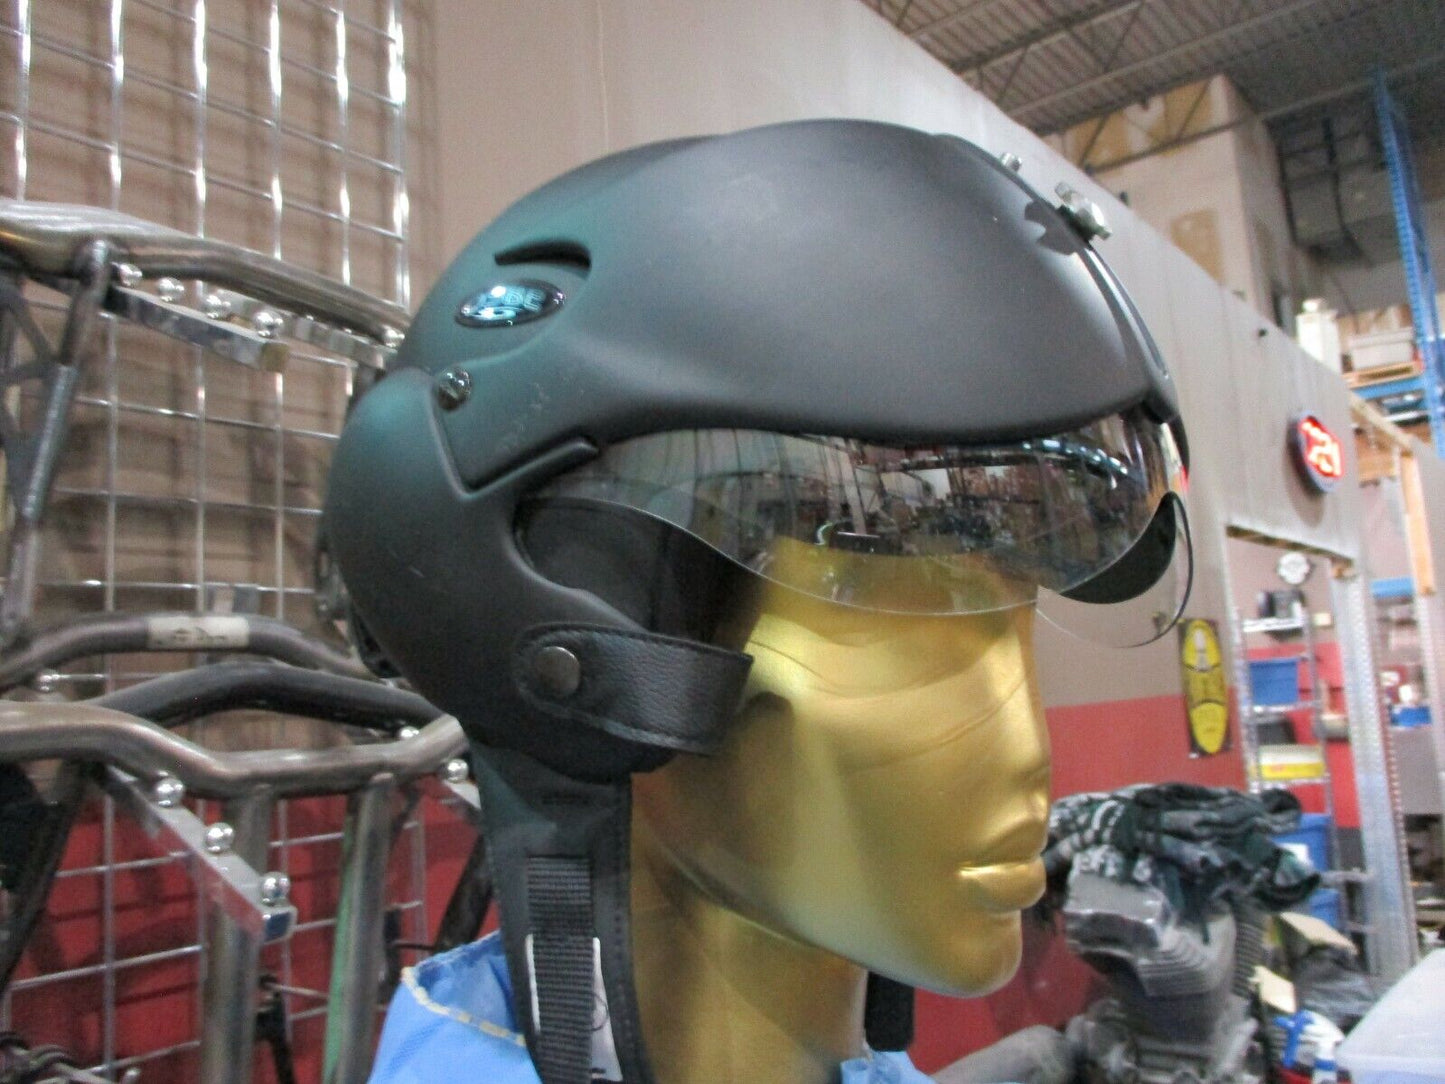 OSBE Italy - Motorcycle Helmet Tornado Demi-Jet Half Face With Double Visor